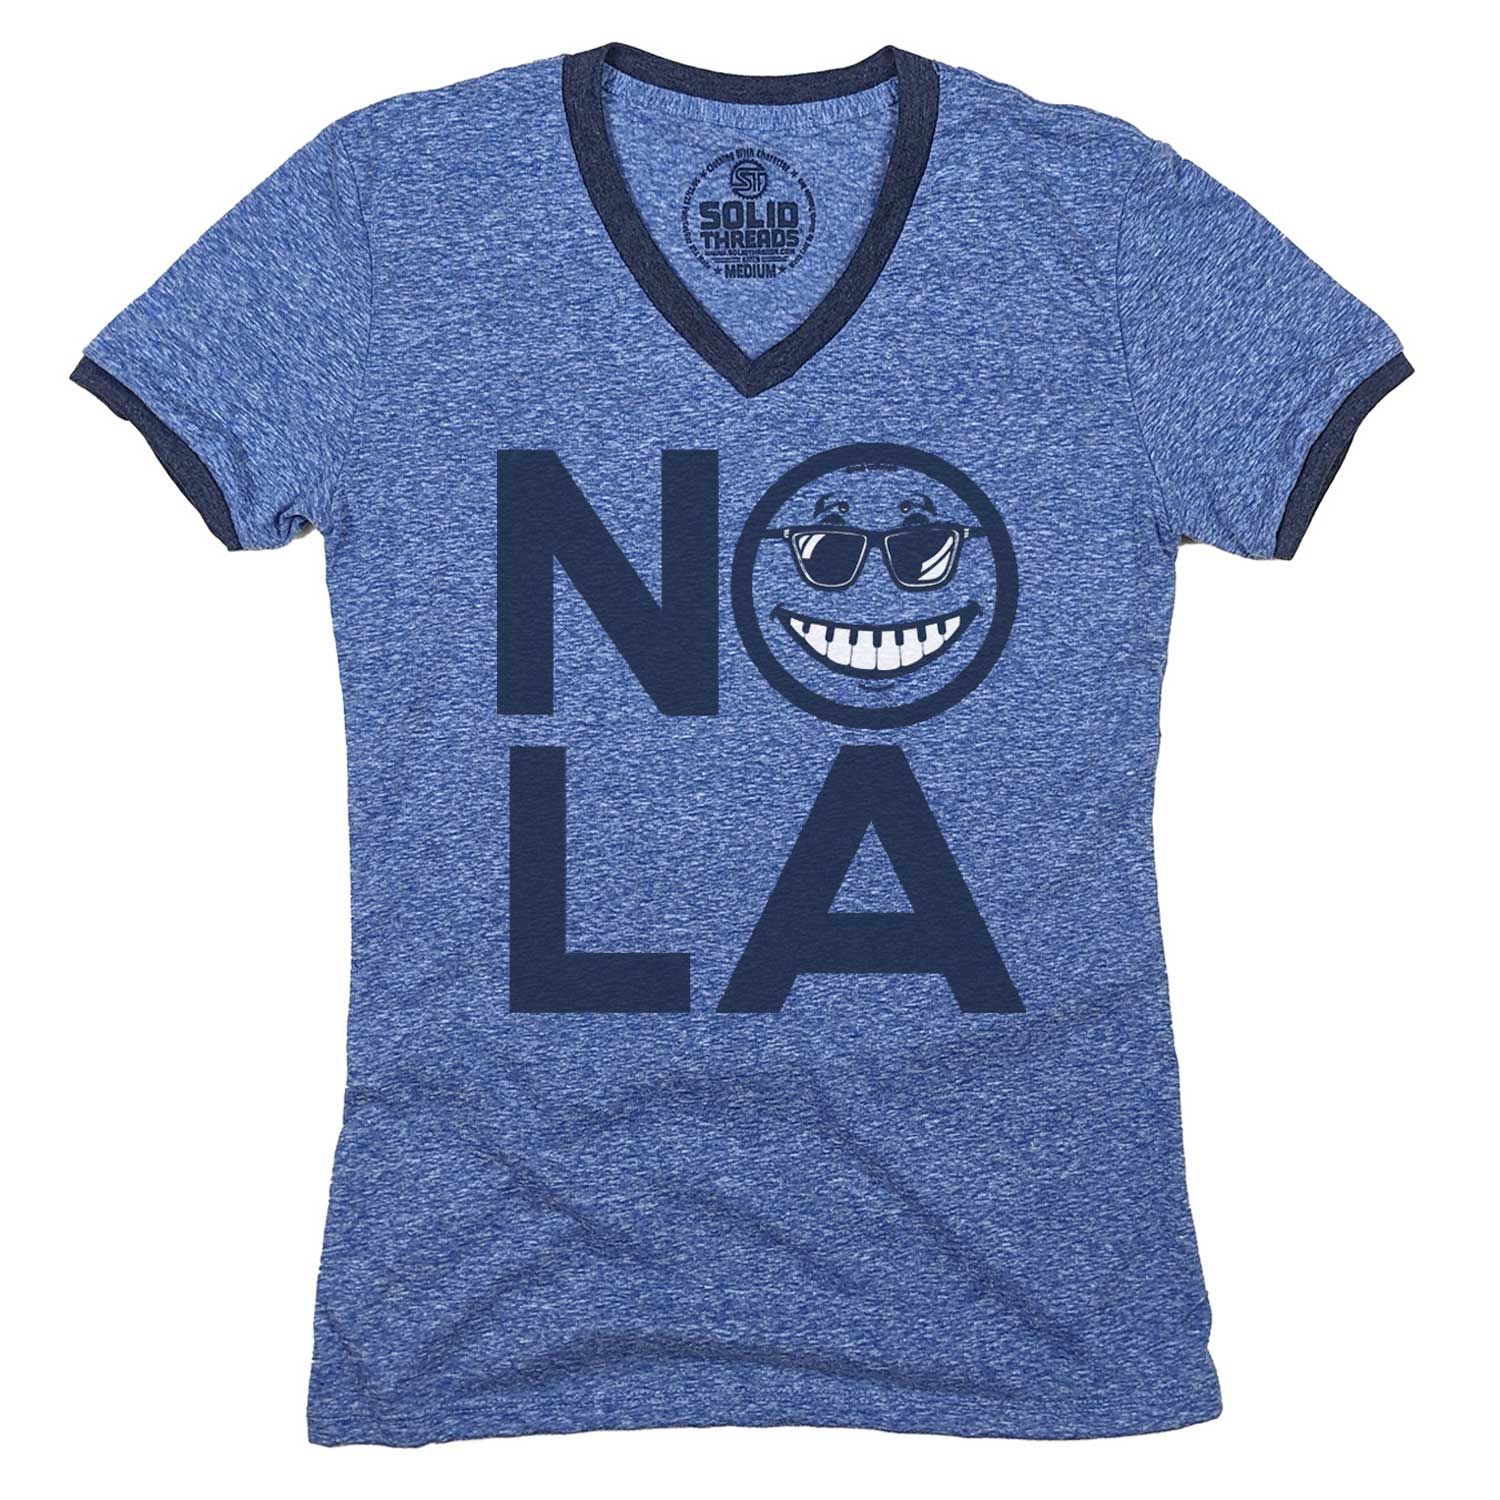 Classic Retro Vintage New Orleans Louisiana Big Easy NOLA T-Shirt 